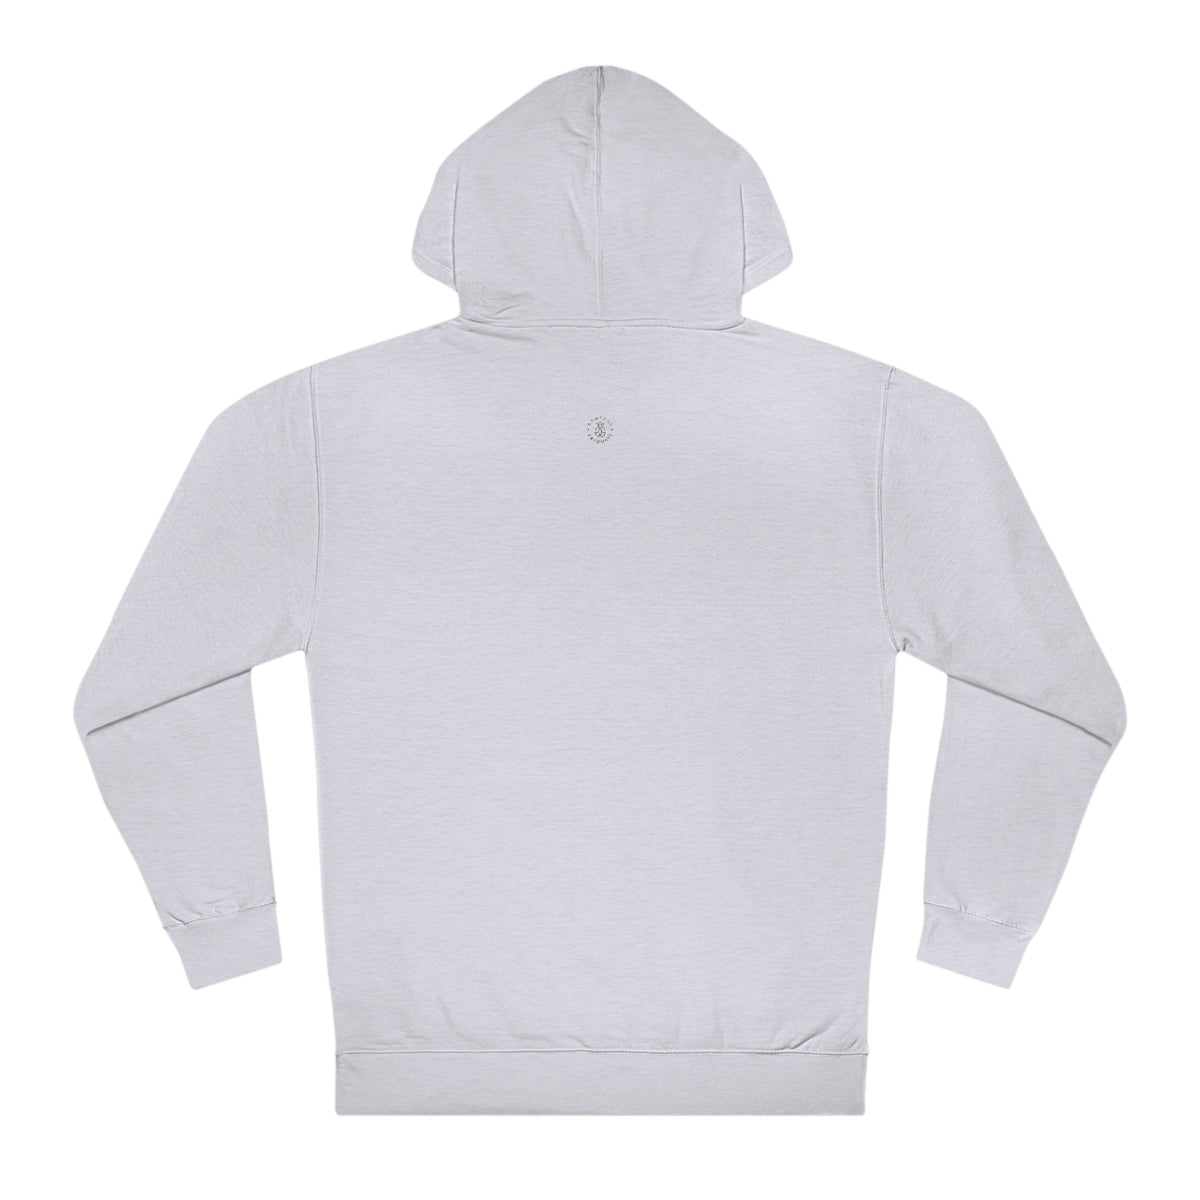 Oklahoma State Hooded Sweatshirt - GG - ITC